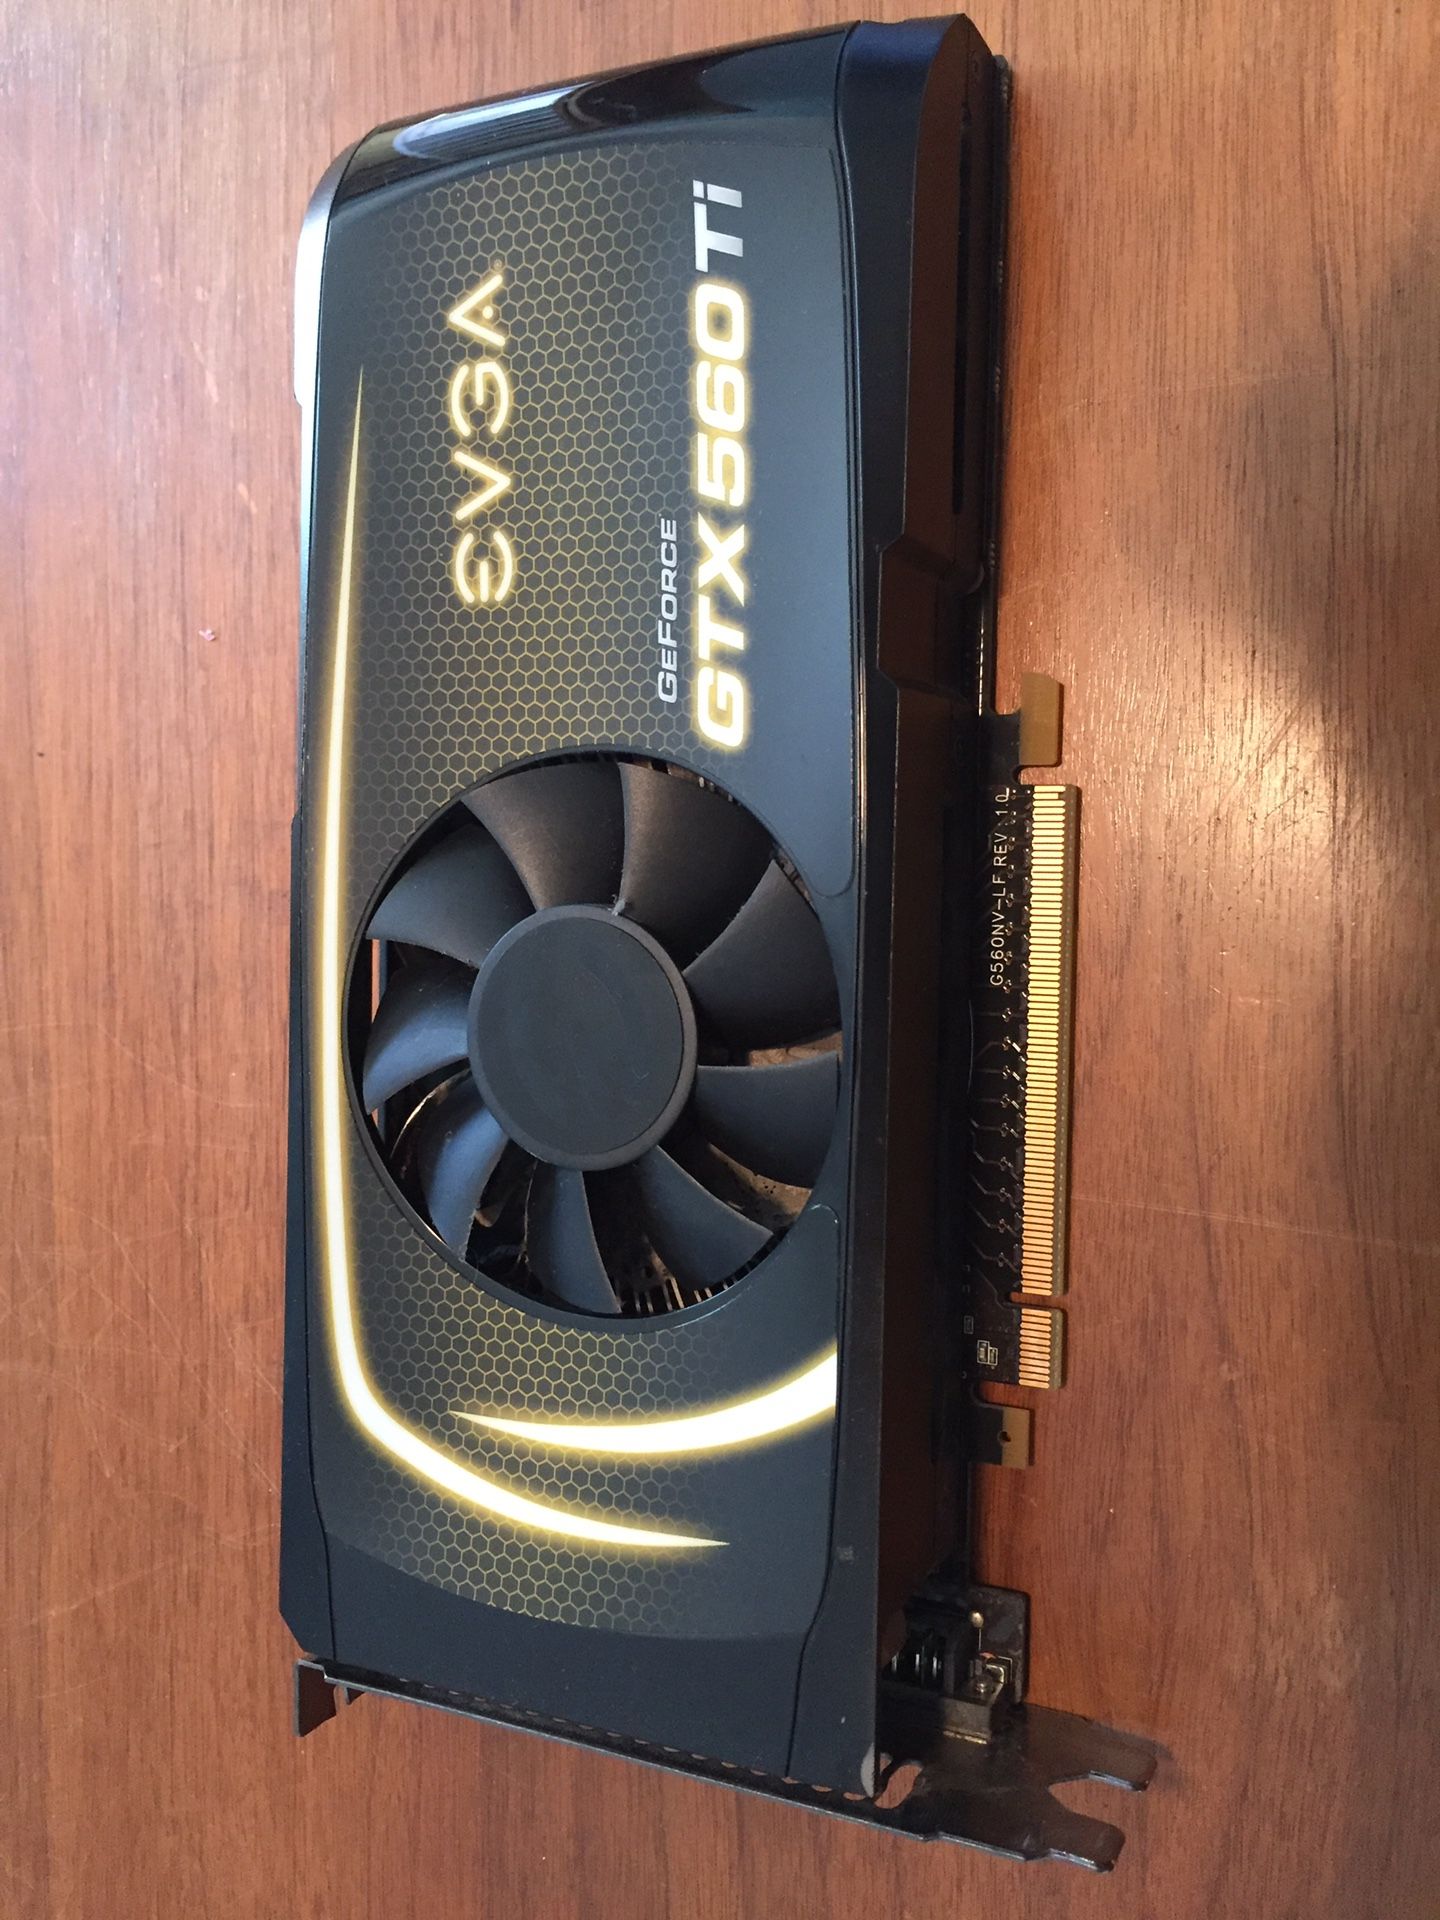 EVEA GeForce GTX 560 Ti graphics card